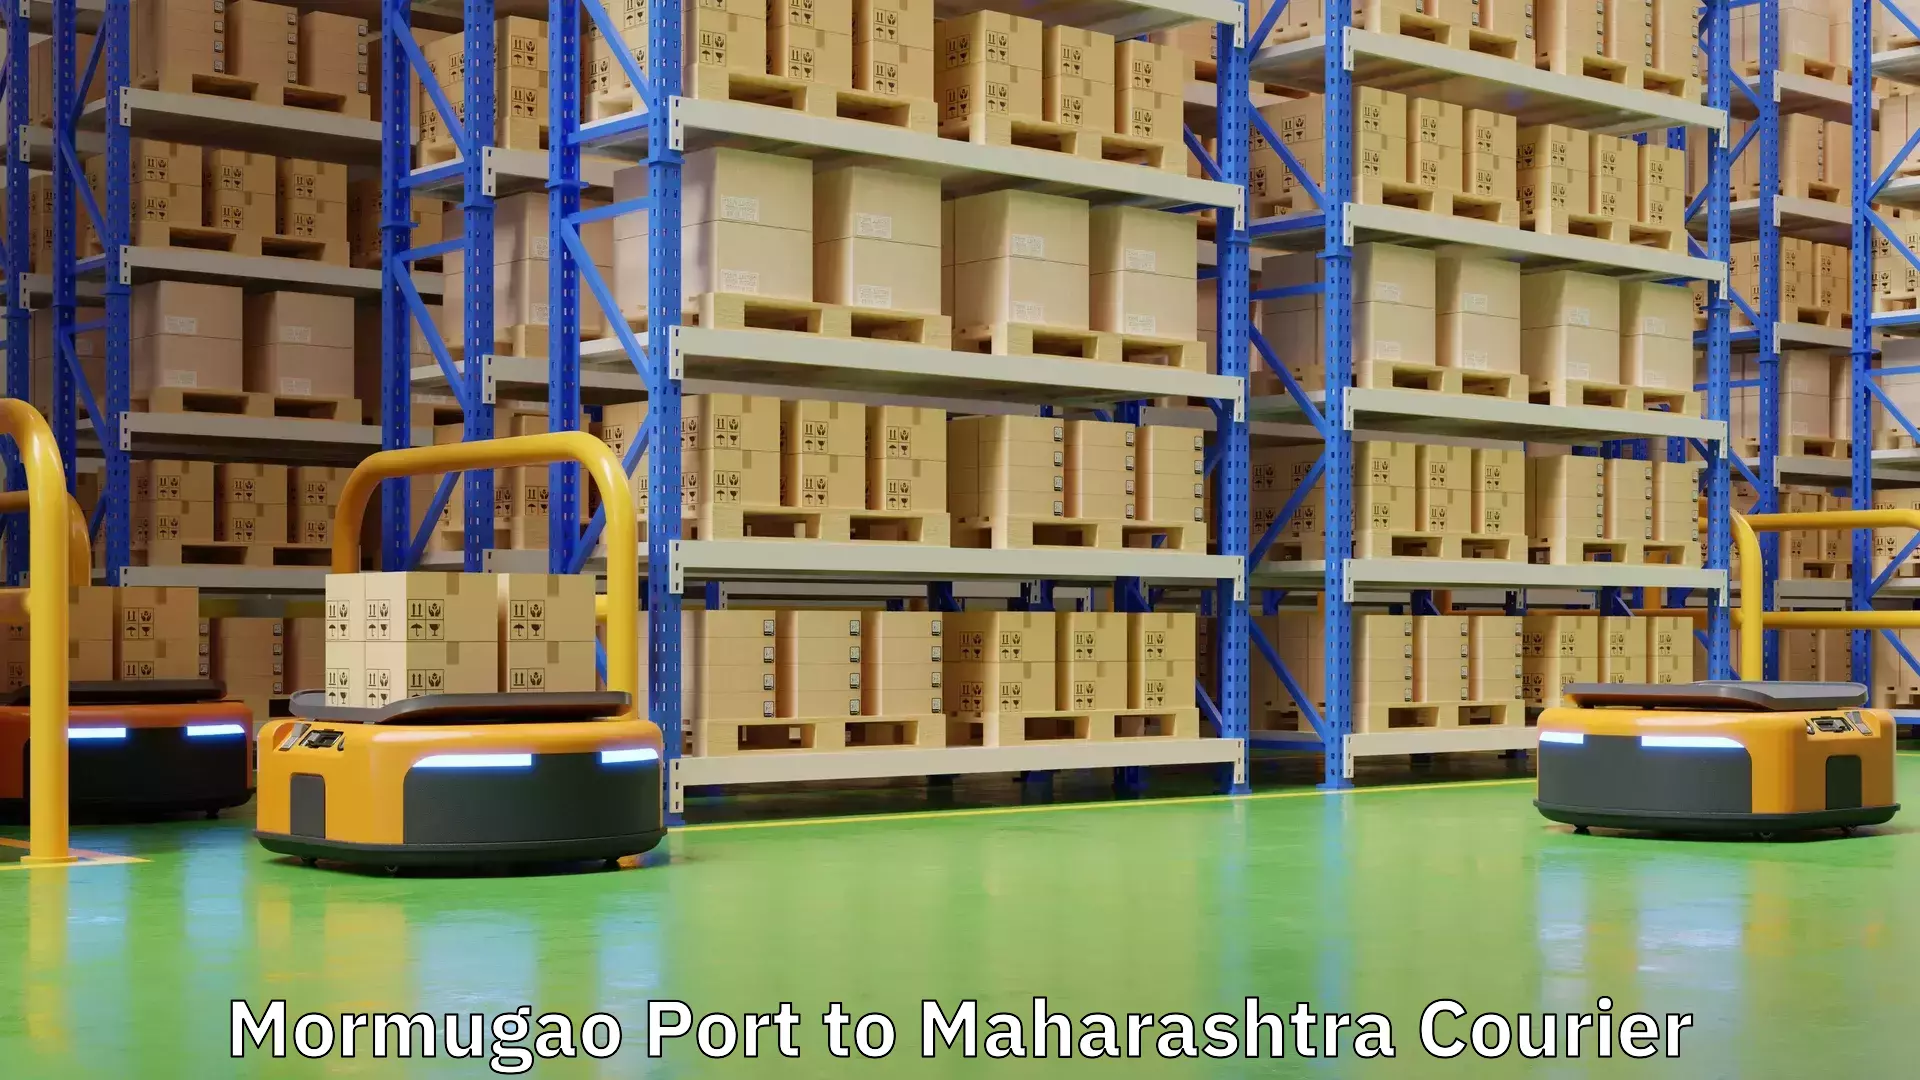 Multi-national courier services Mormugao Port to Maharashtra